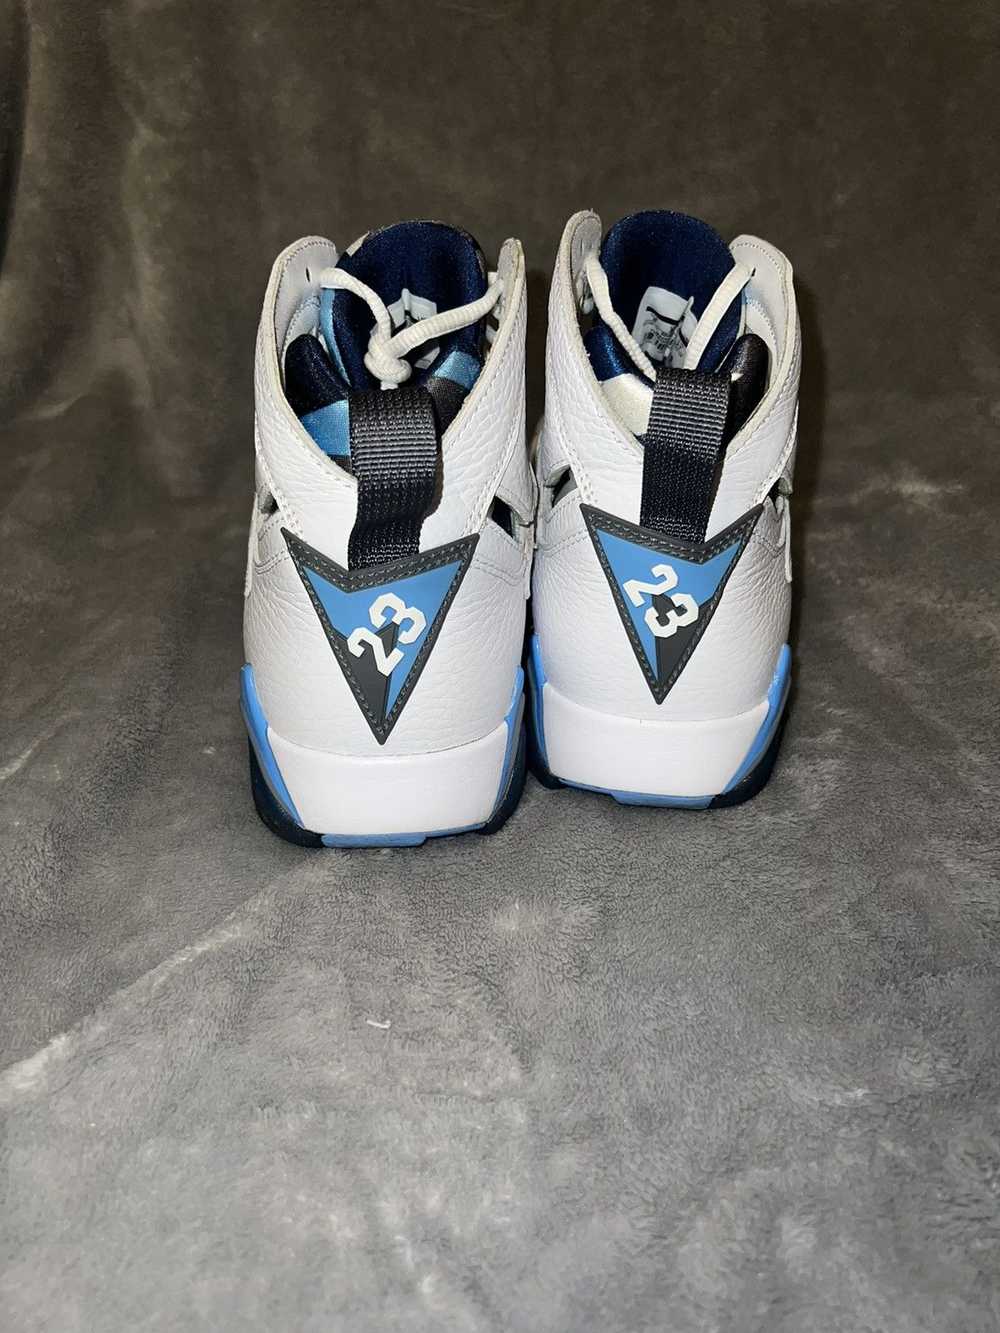 Jordan Brand × Nike Jordan 7 “French Blue” - image 2